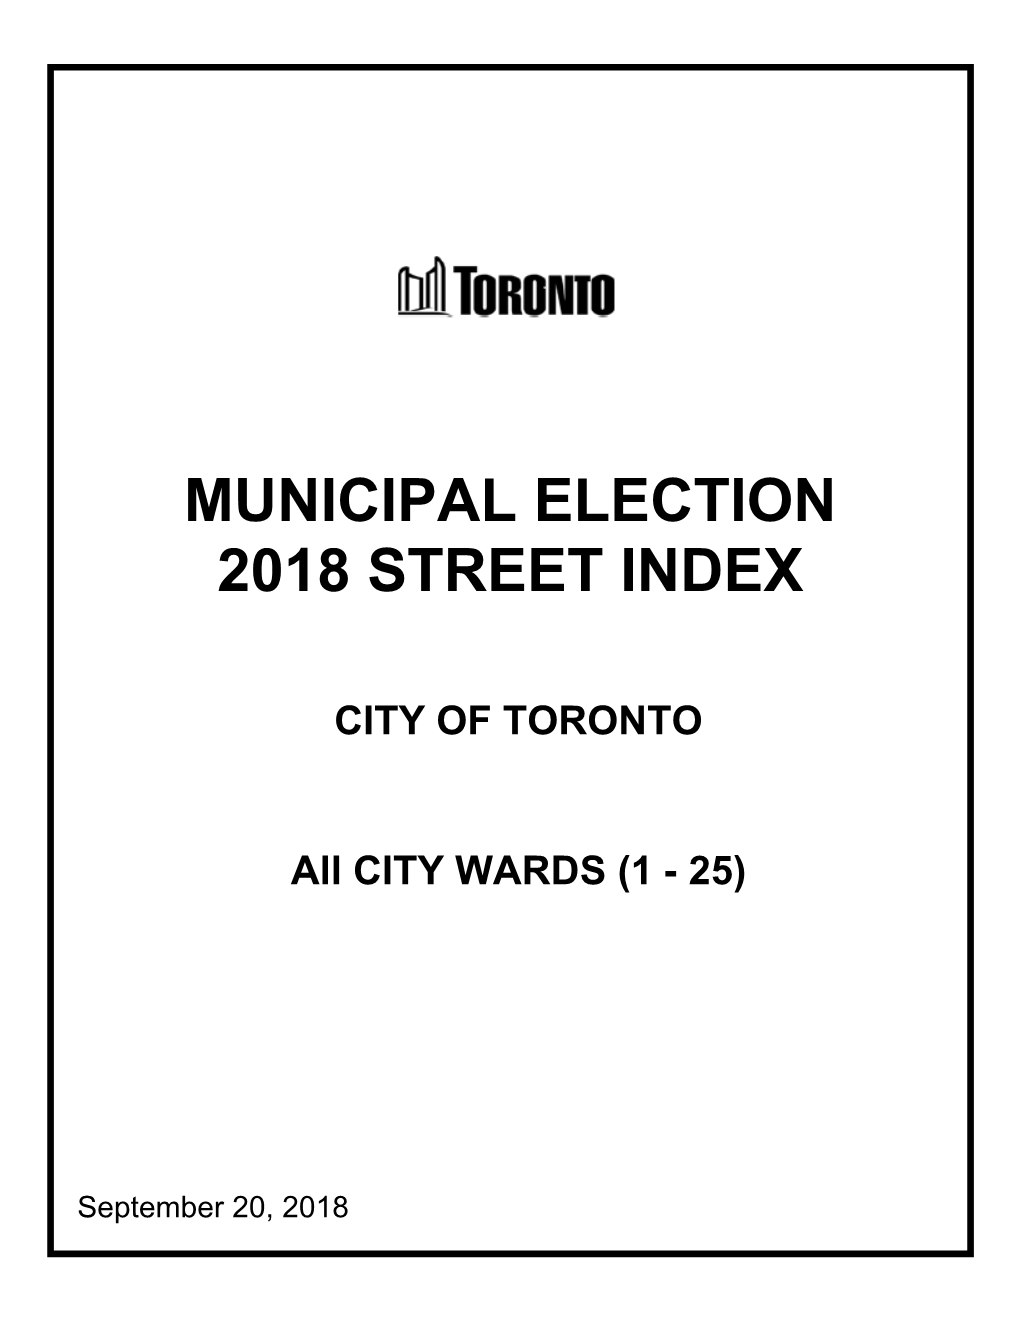 Municipal Election 2018 Street Index